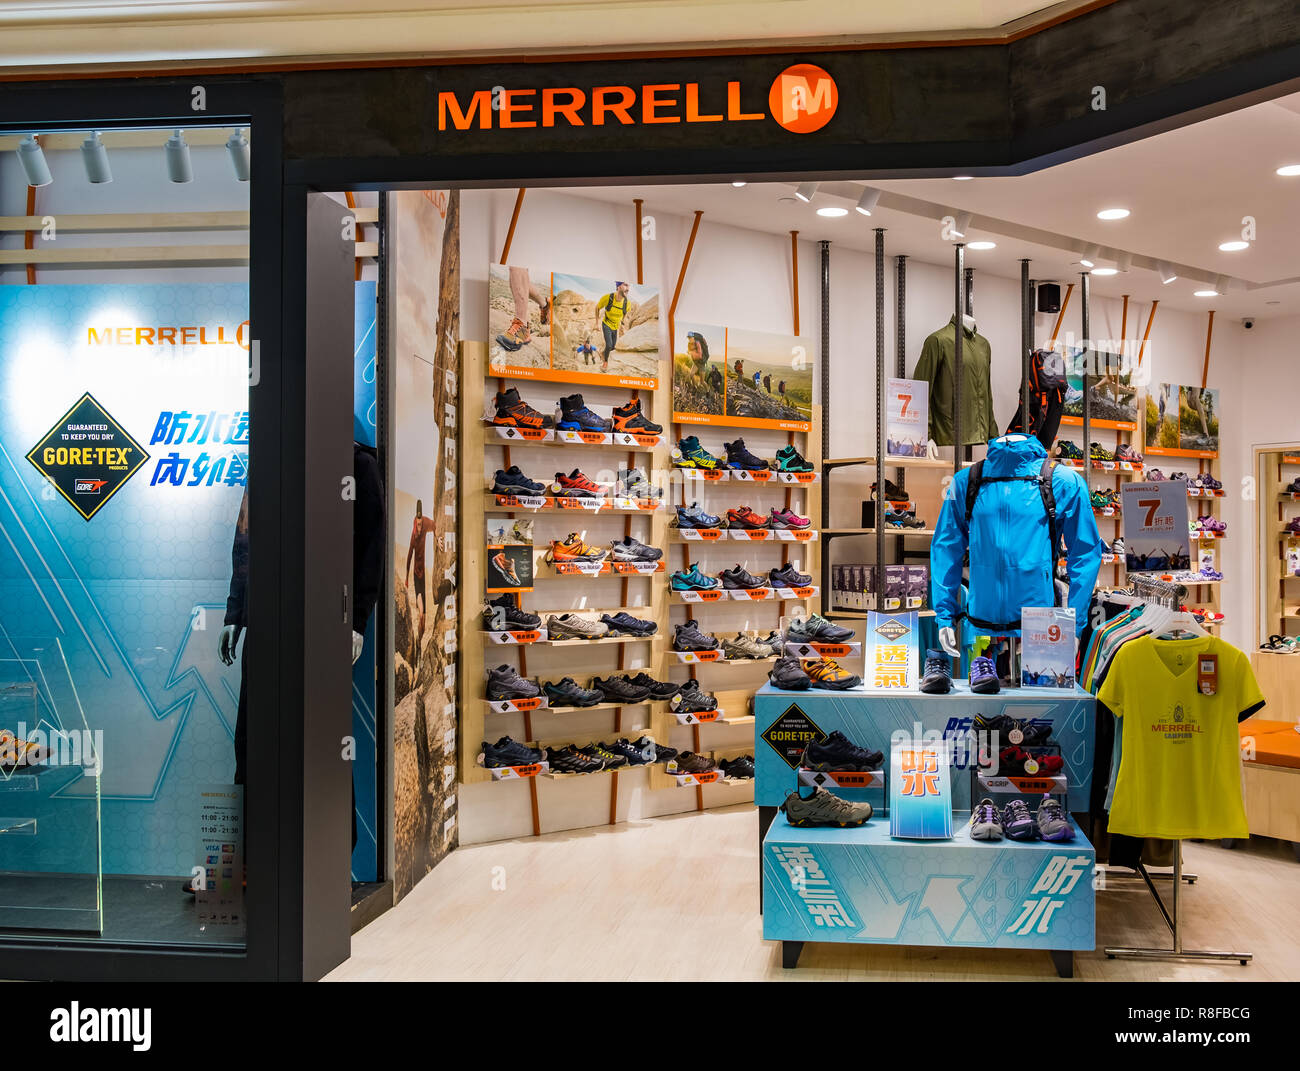 Hong 7, 2019: Merrell store in Hong Kong Photo -